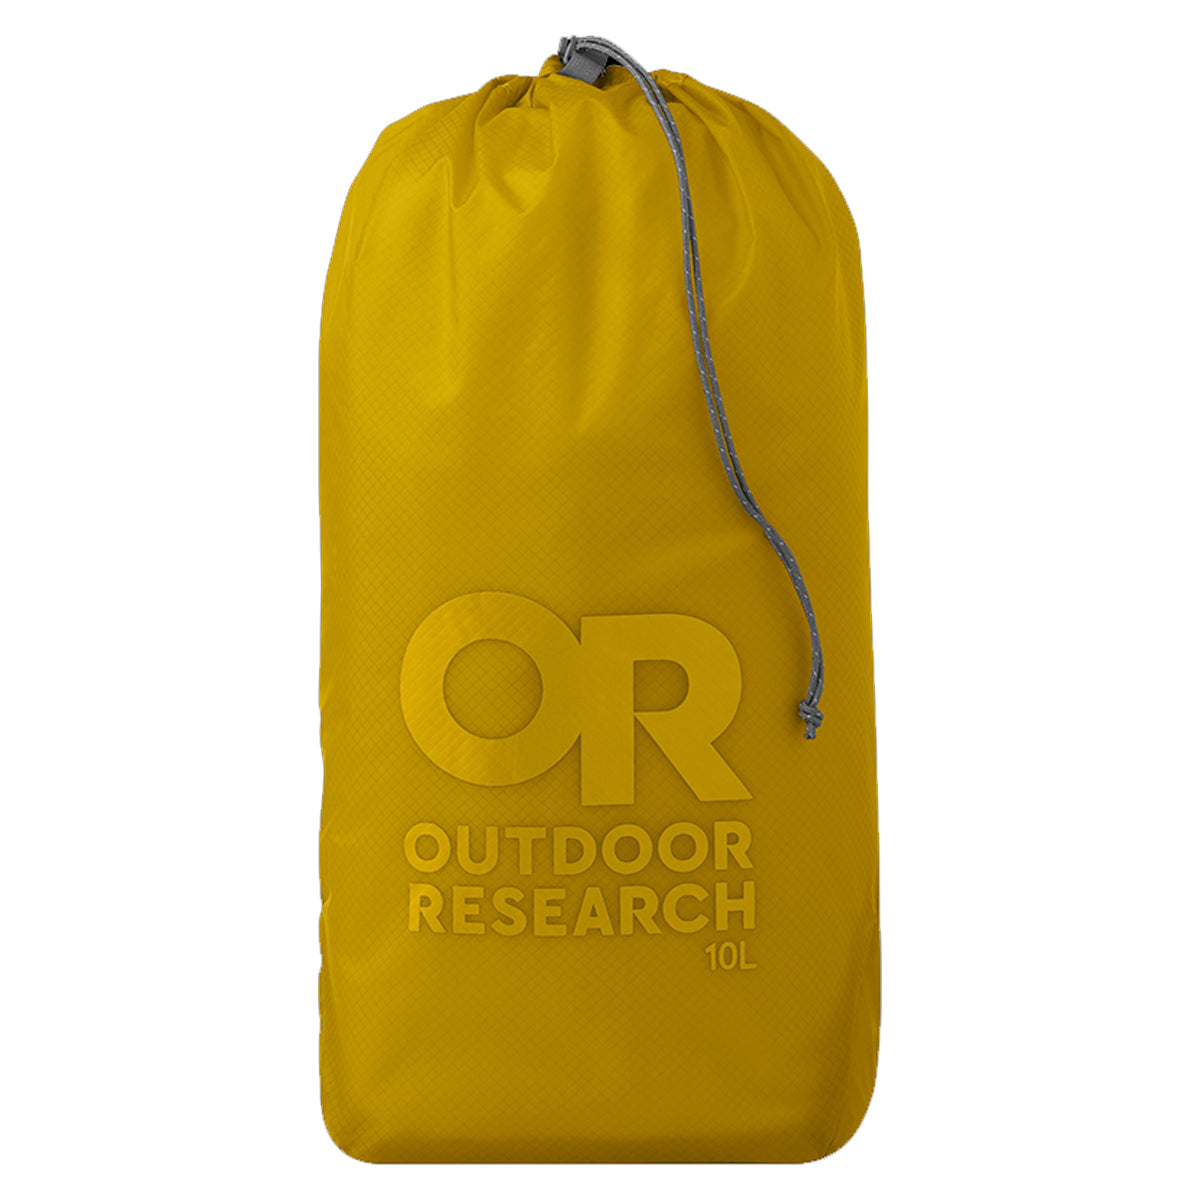 Outdoor Research PackOut Ultralight Stuff Sack in  by GOHUNT | Outdoor Research - GOHUNT Shop